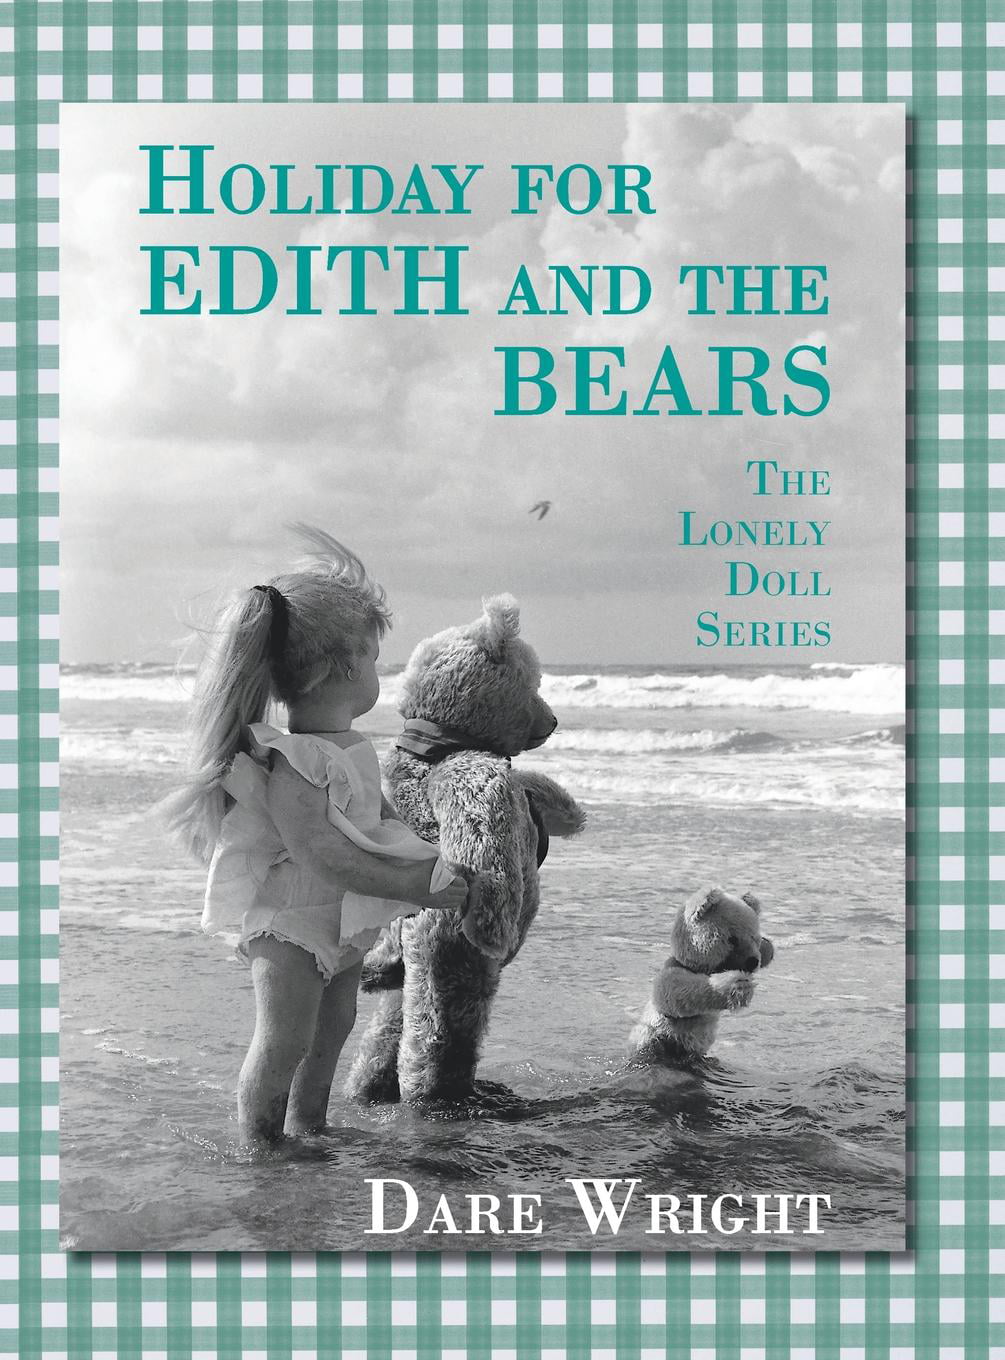 NEW EDITH THE LONELY DOLL Anniversary Set Doll Bear & MINI Dare Wright Book 